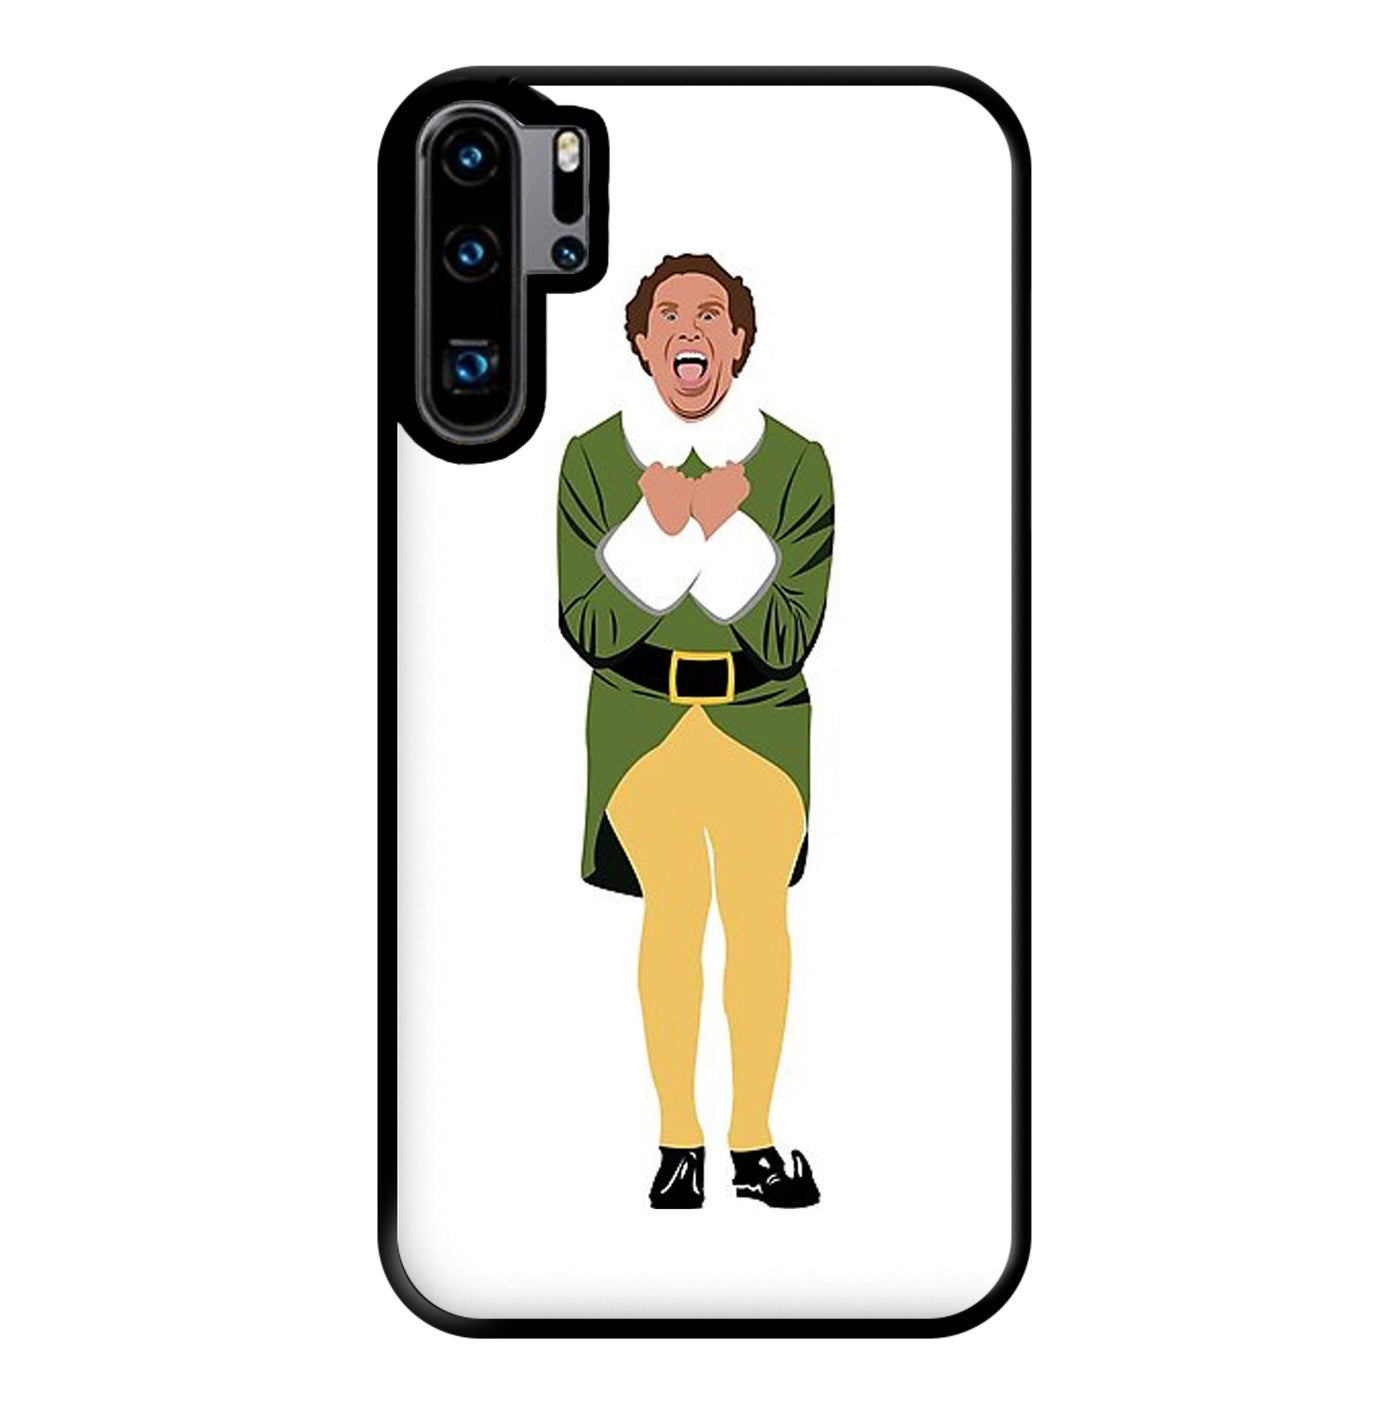 YAY - Buddy The Elf Phone Case